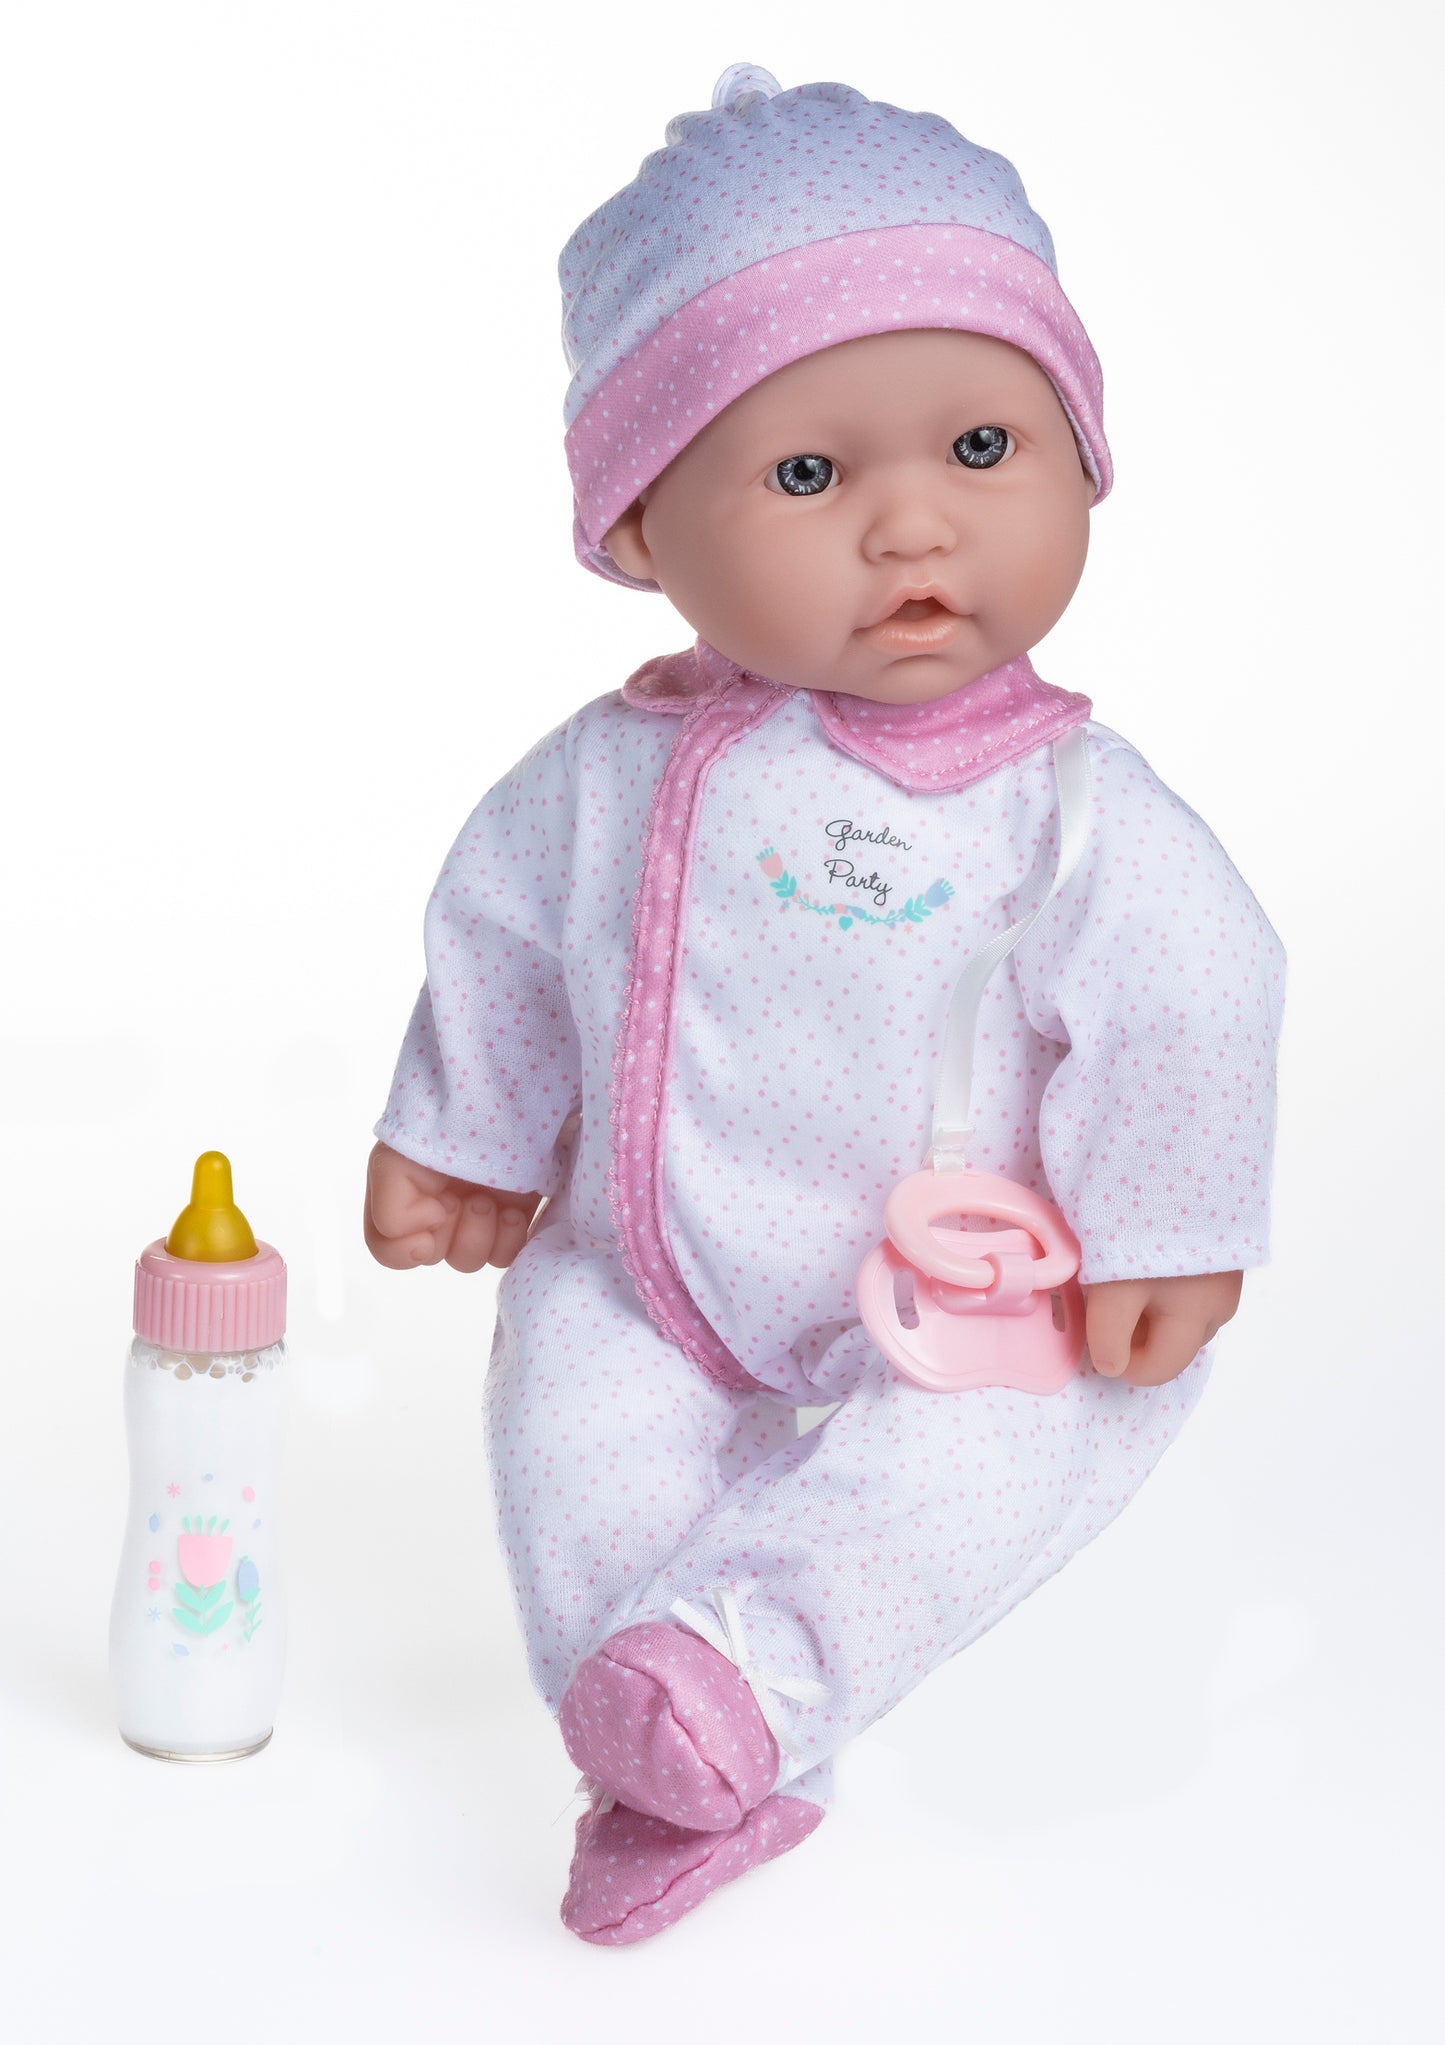 La Baby ® 16" Soft Body Baby Doll White/Pink Onesie w/ Pacifier & Magic Bottle.